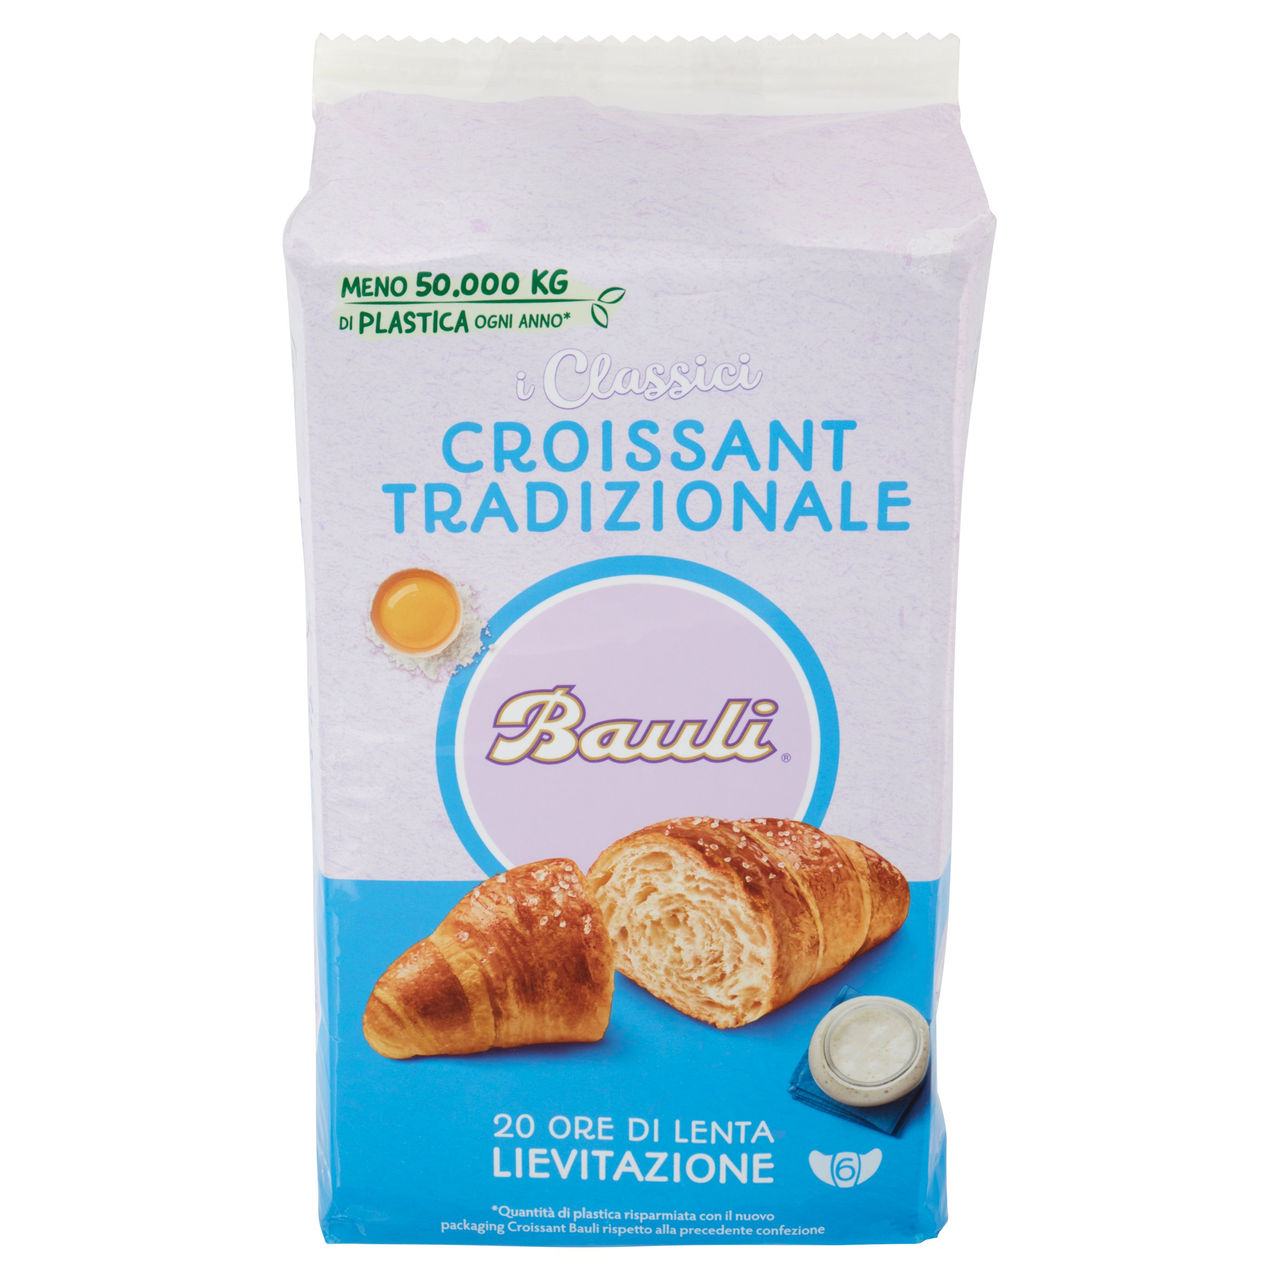 Bauli i Classici Croissant Tradizionale 6 x 40 g